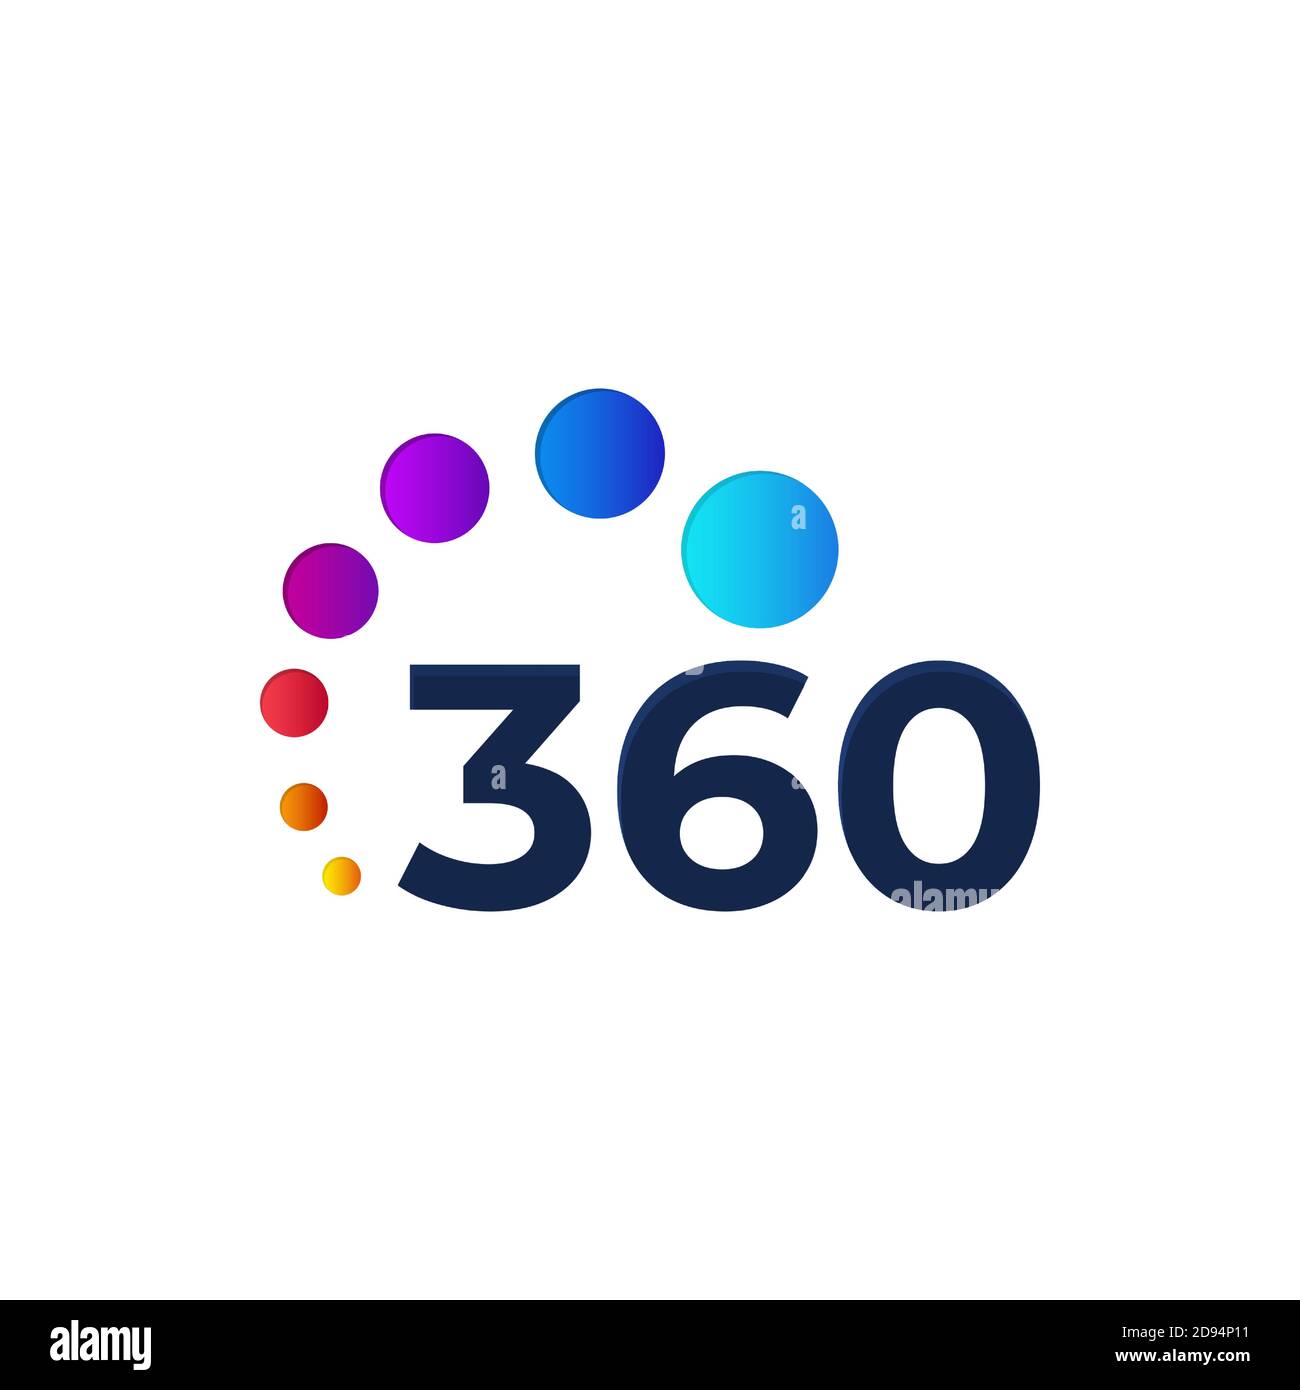 360 logo design vector inspiration Stock Vector Image & Art - Alamy